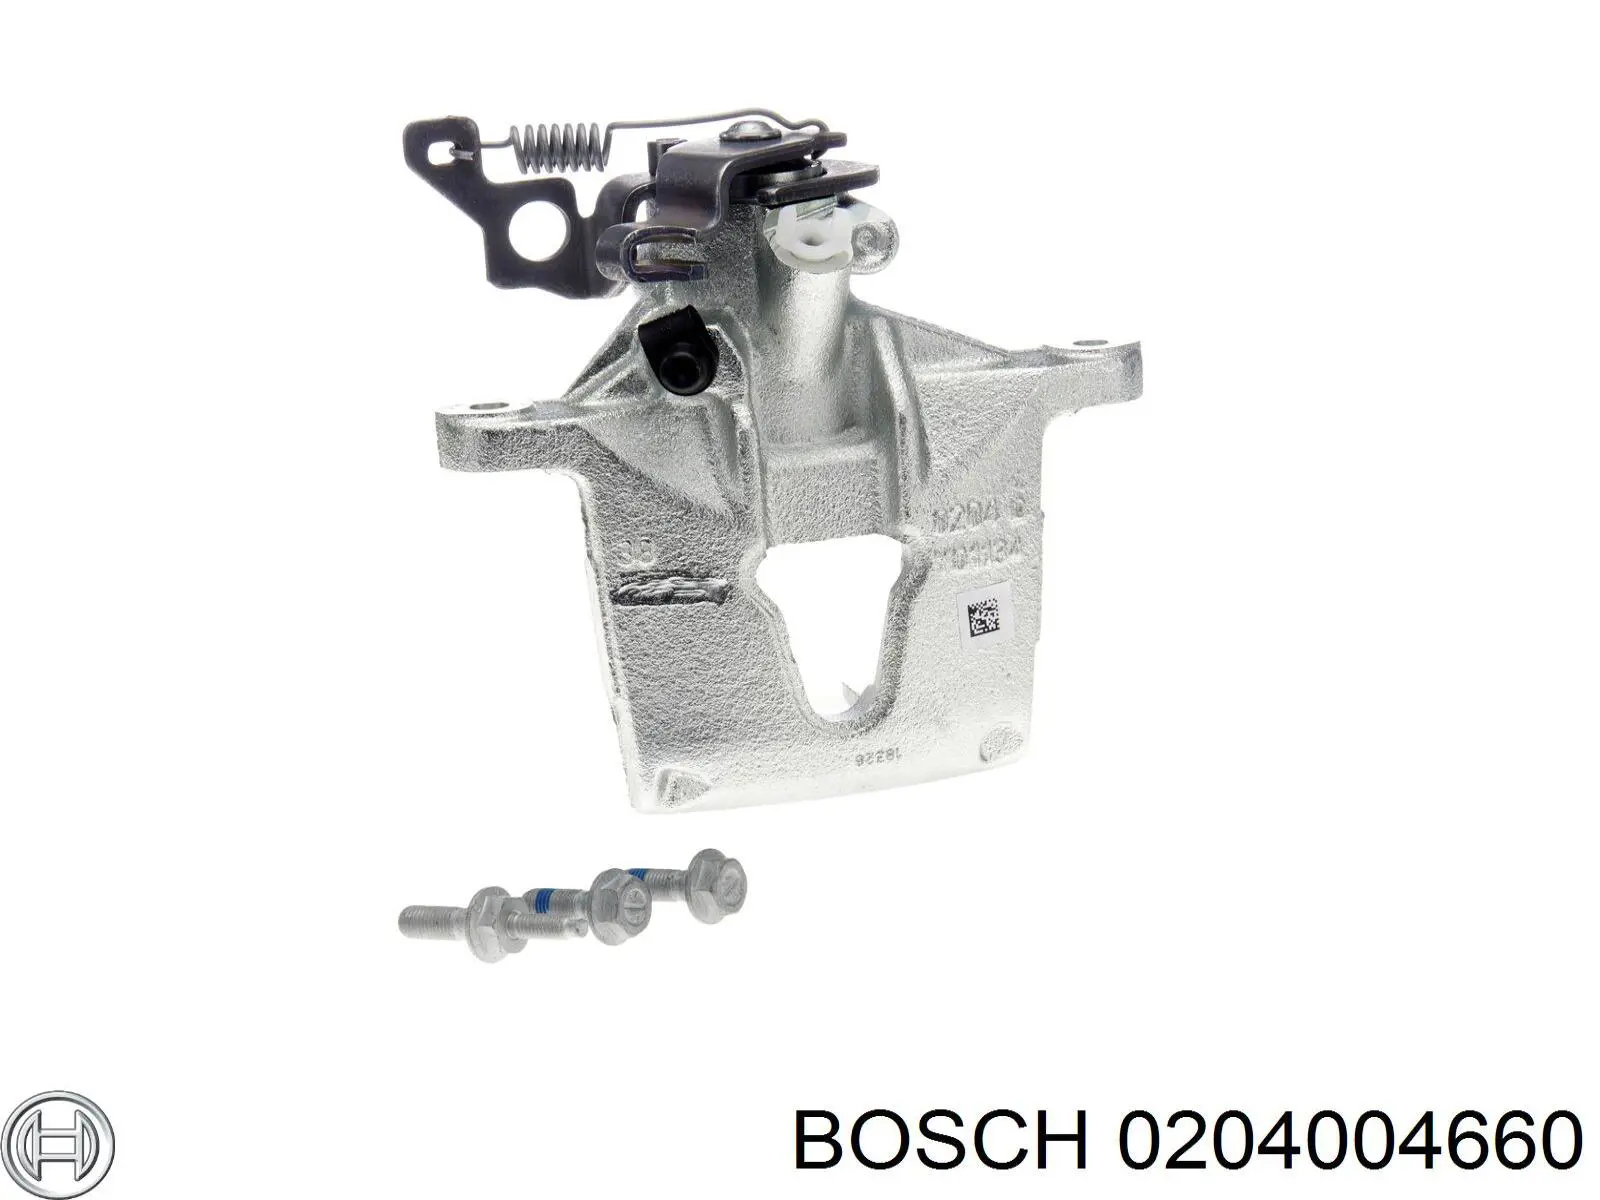 0204004660 Bosch suporte do freio traseiro esquerdo